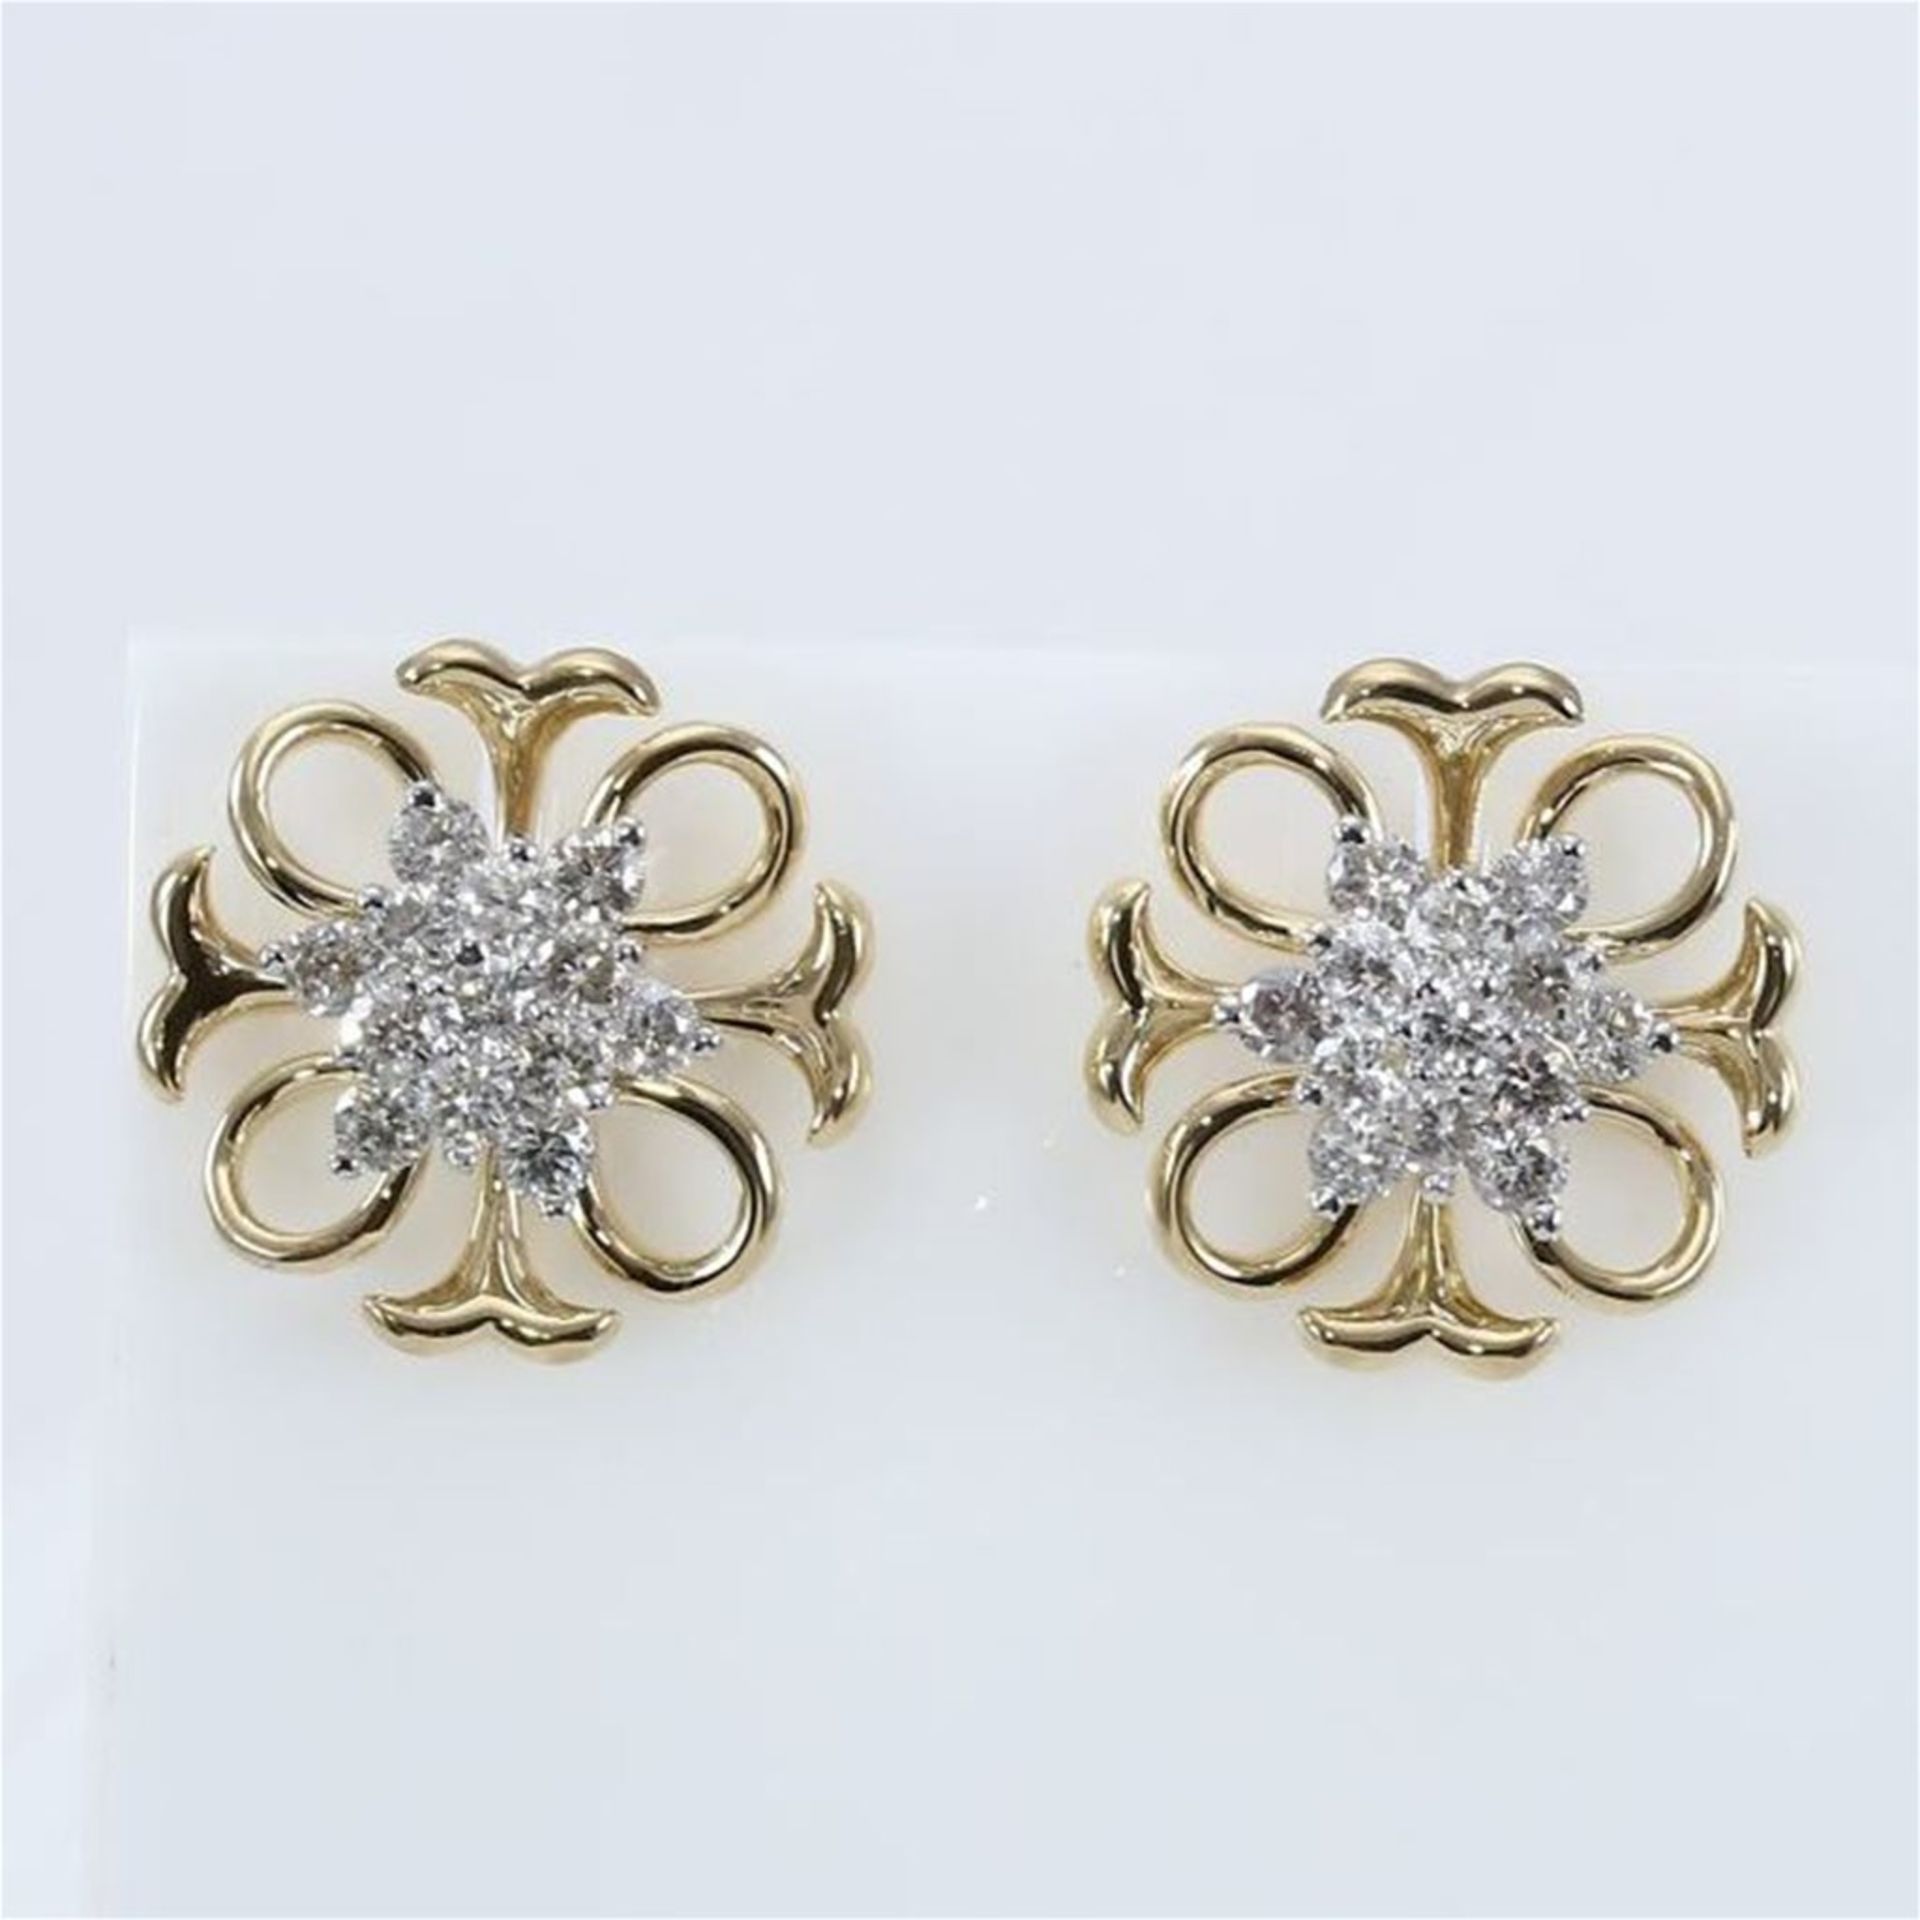 IGI Certified 18 K/750 Yellow Gold Diamond Earrings - Image 3 of 4